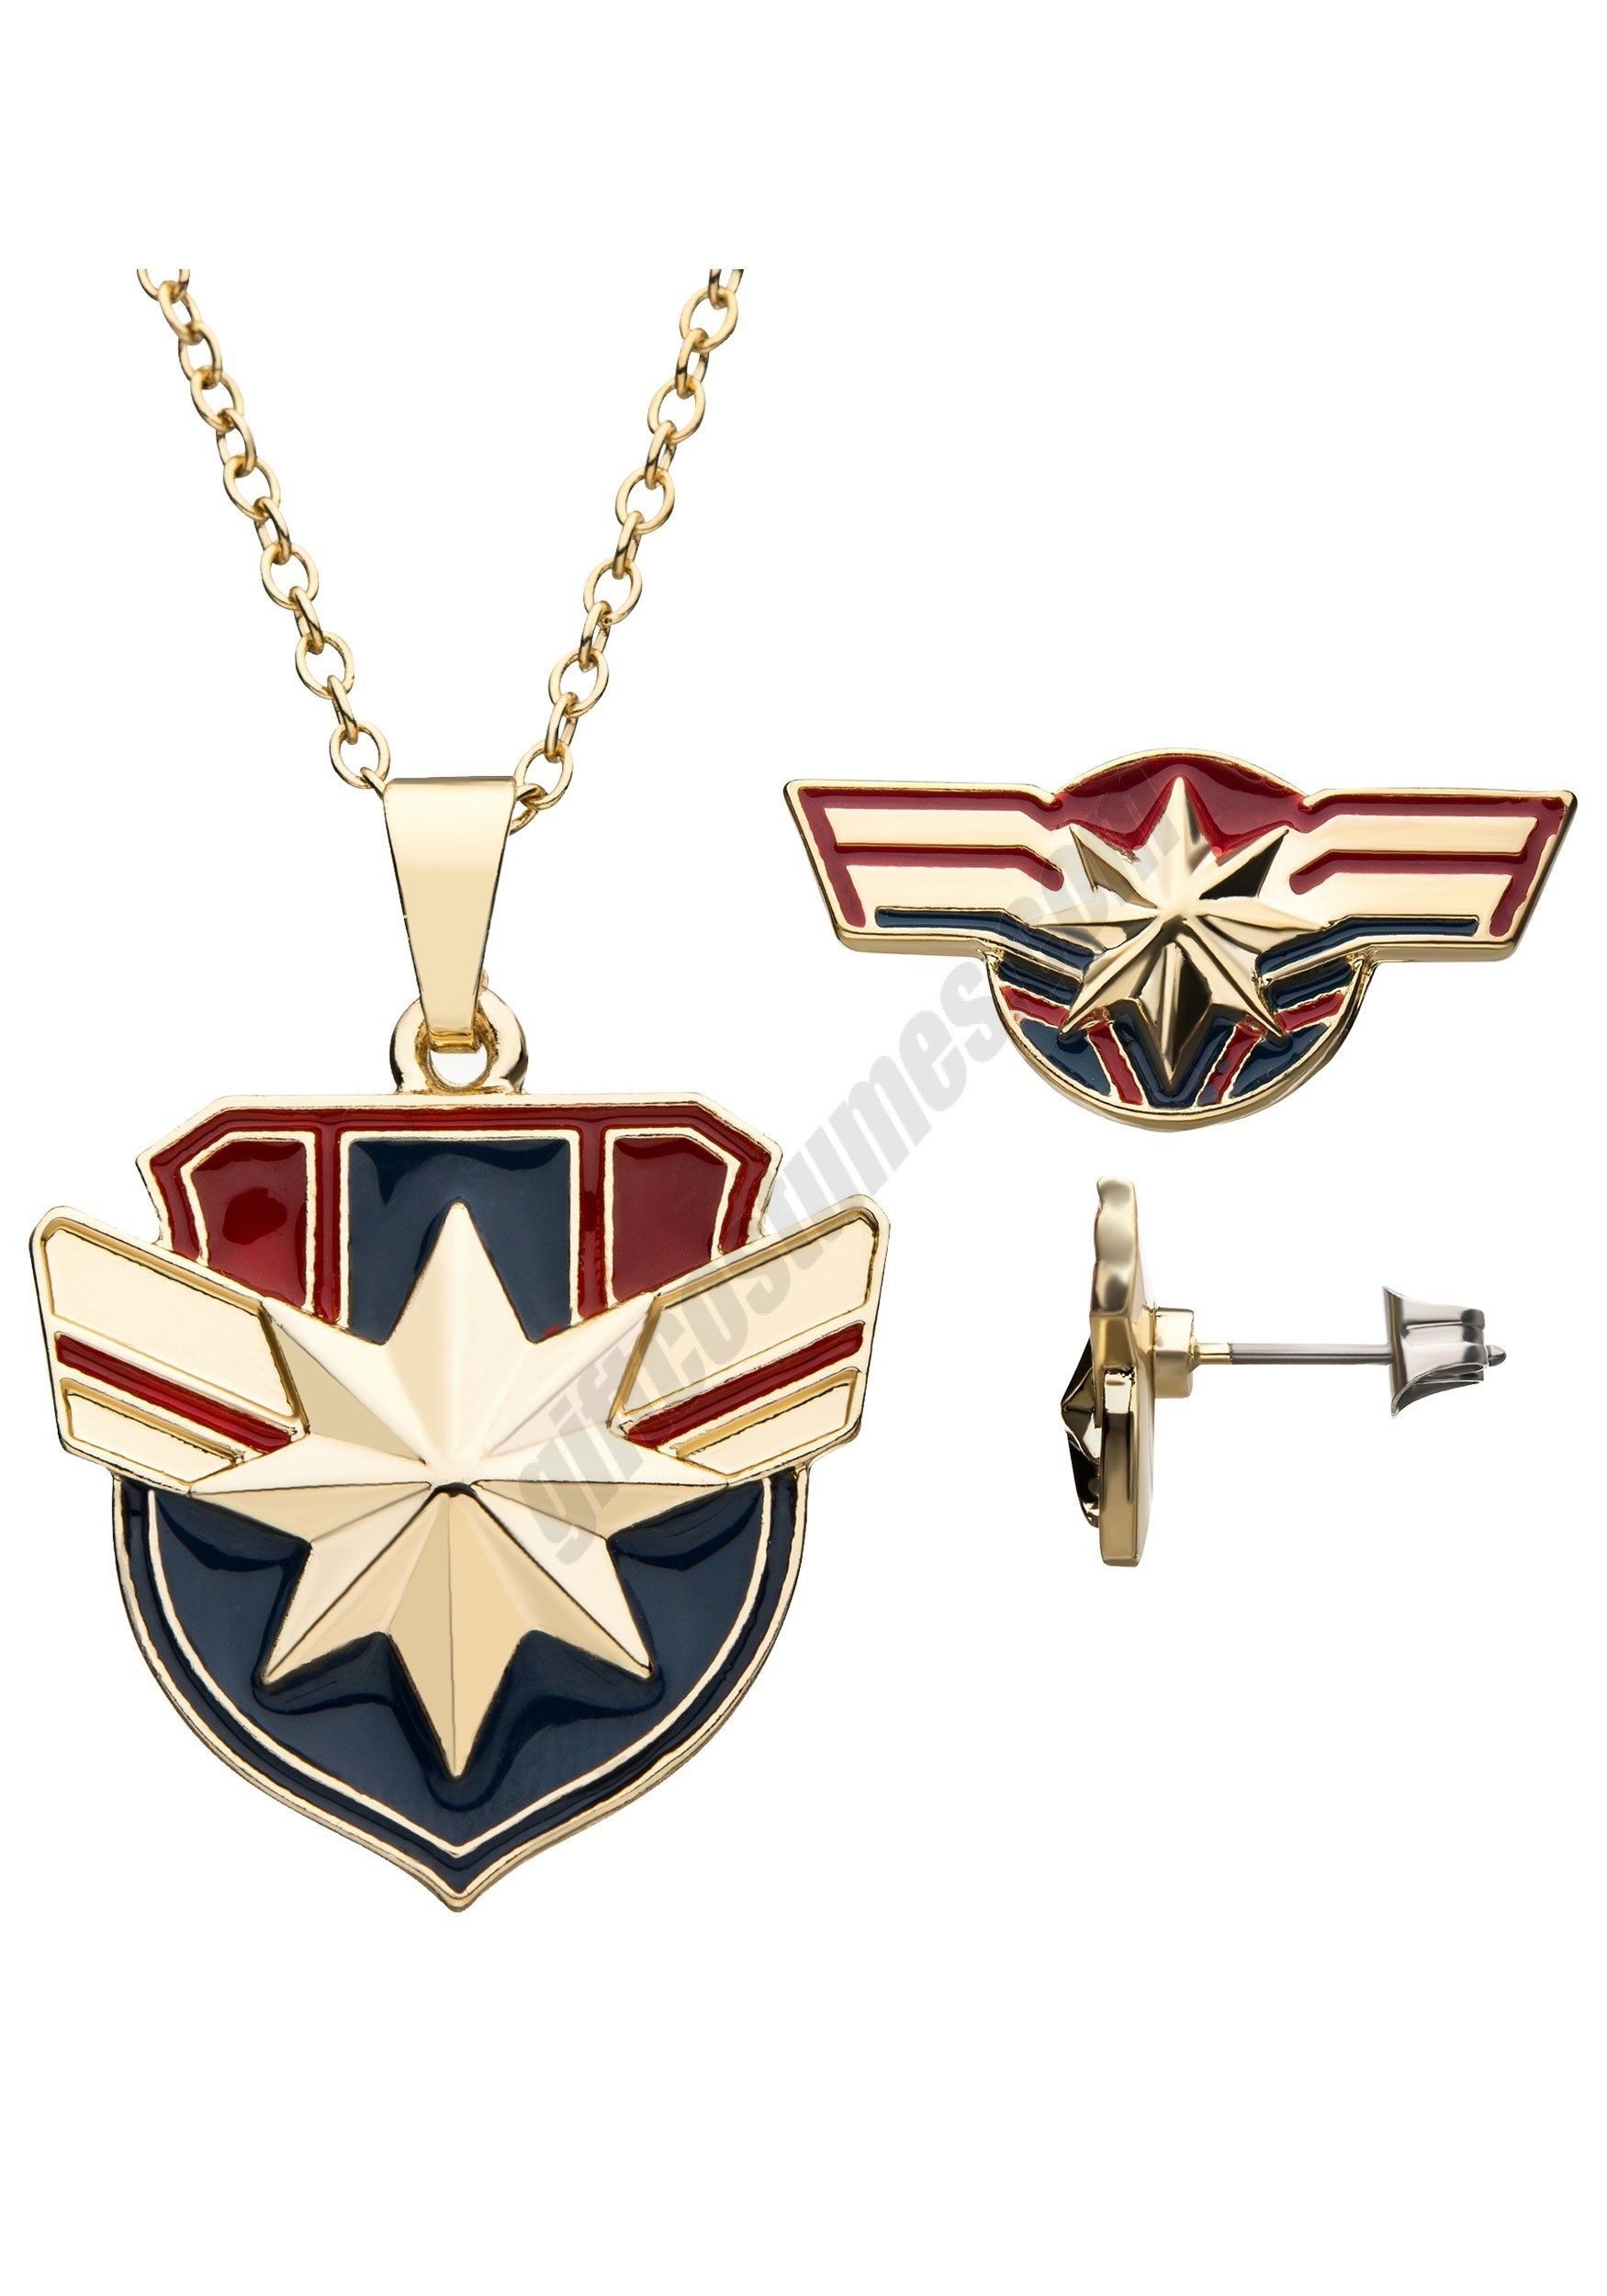 Captain Marvel Necklace/Earring Gift Set Promotions - Captain Marvel Necklace/Earring Gift Set Promotions